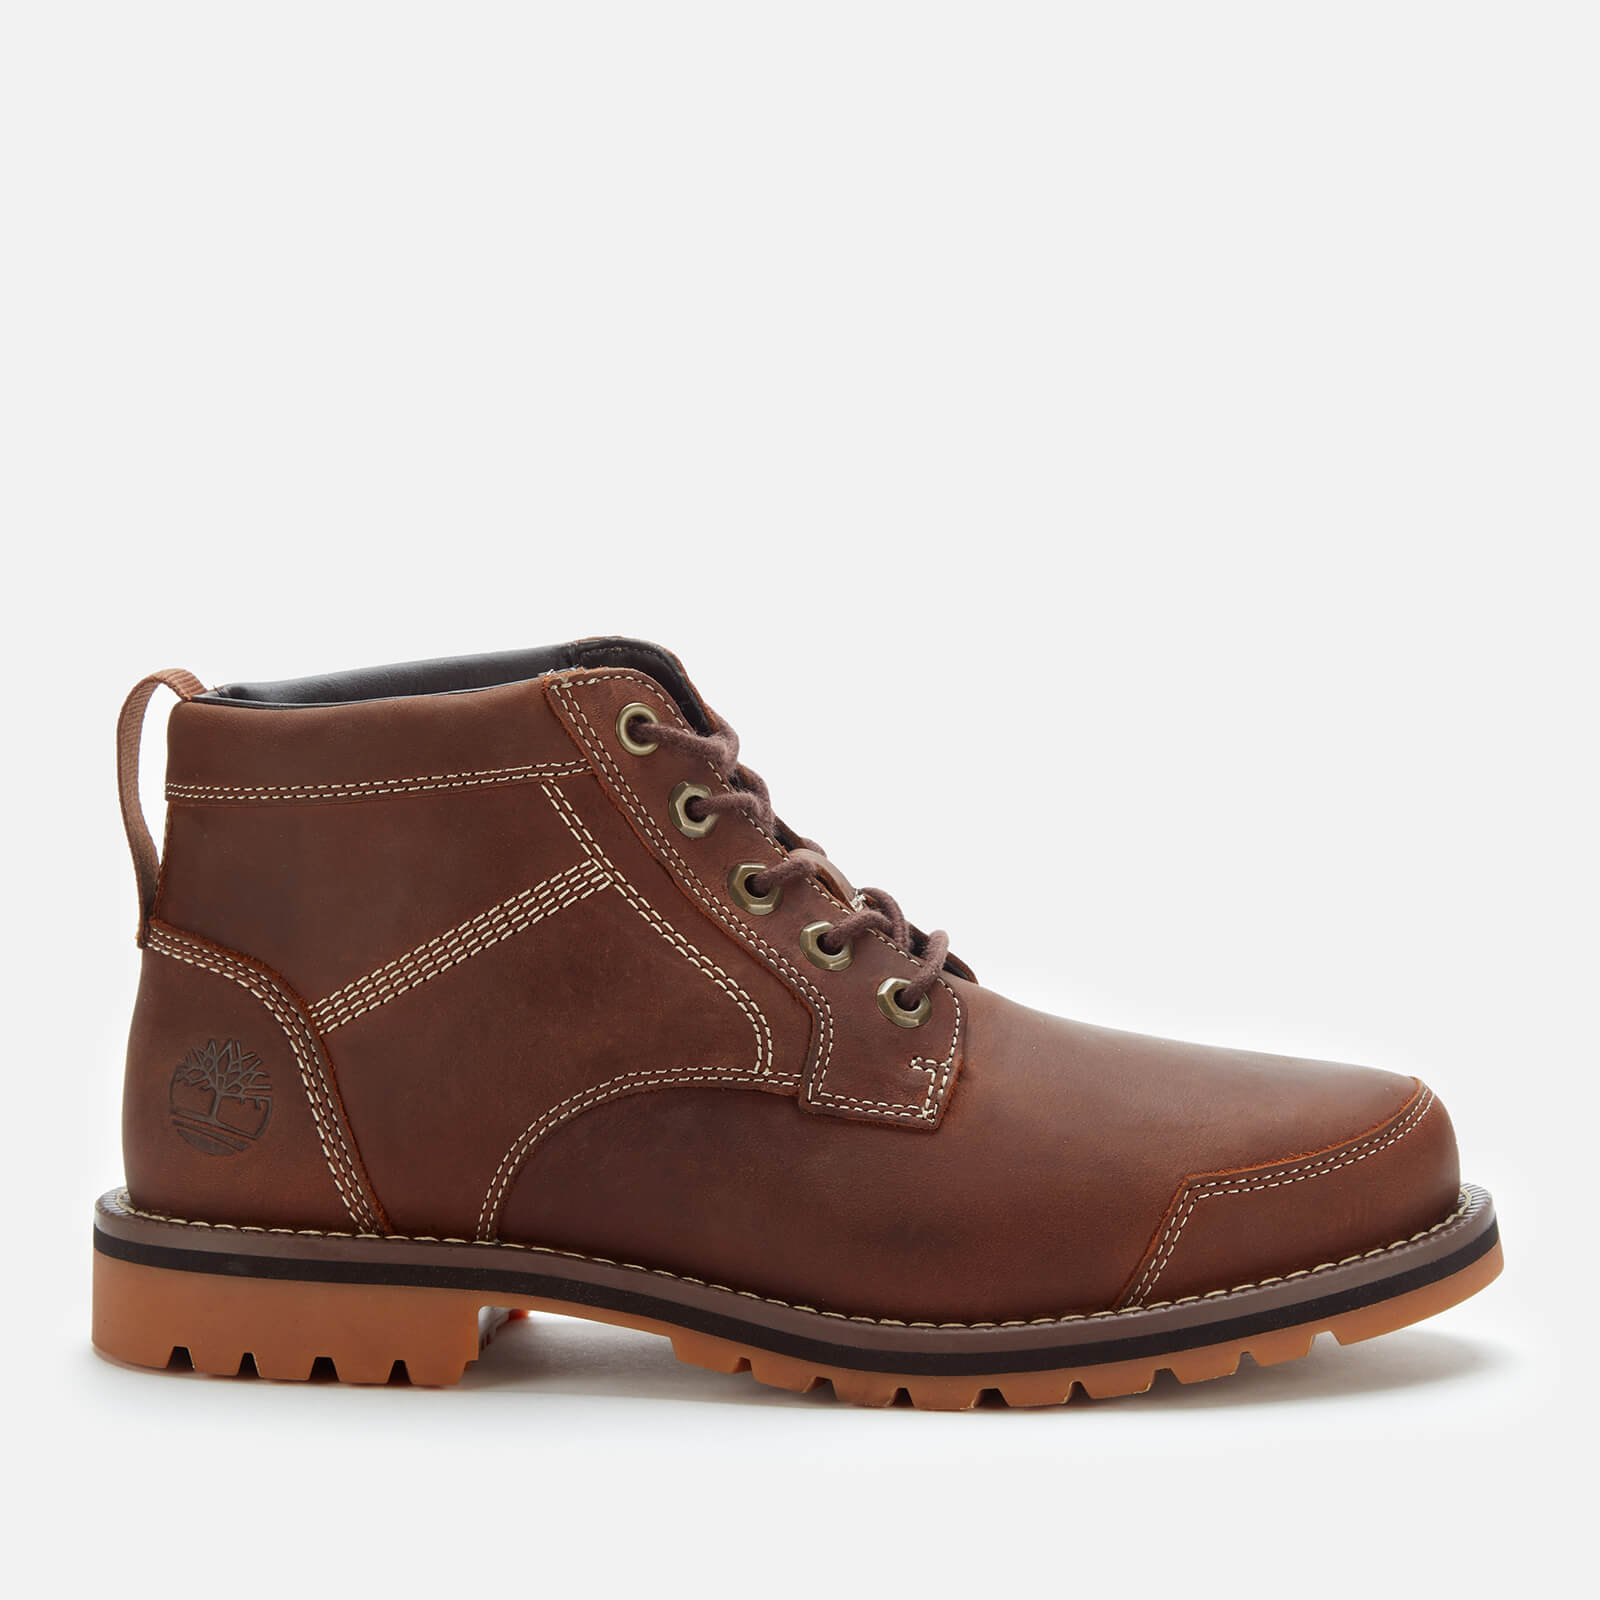 Timberland Men’s Larchmont II Leather Chukka Boots - Rust